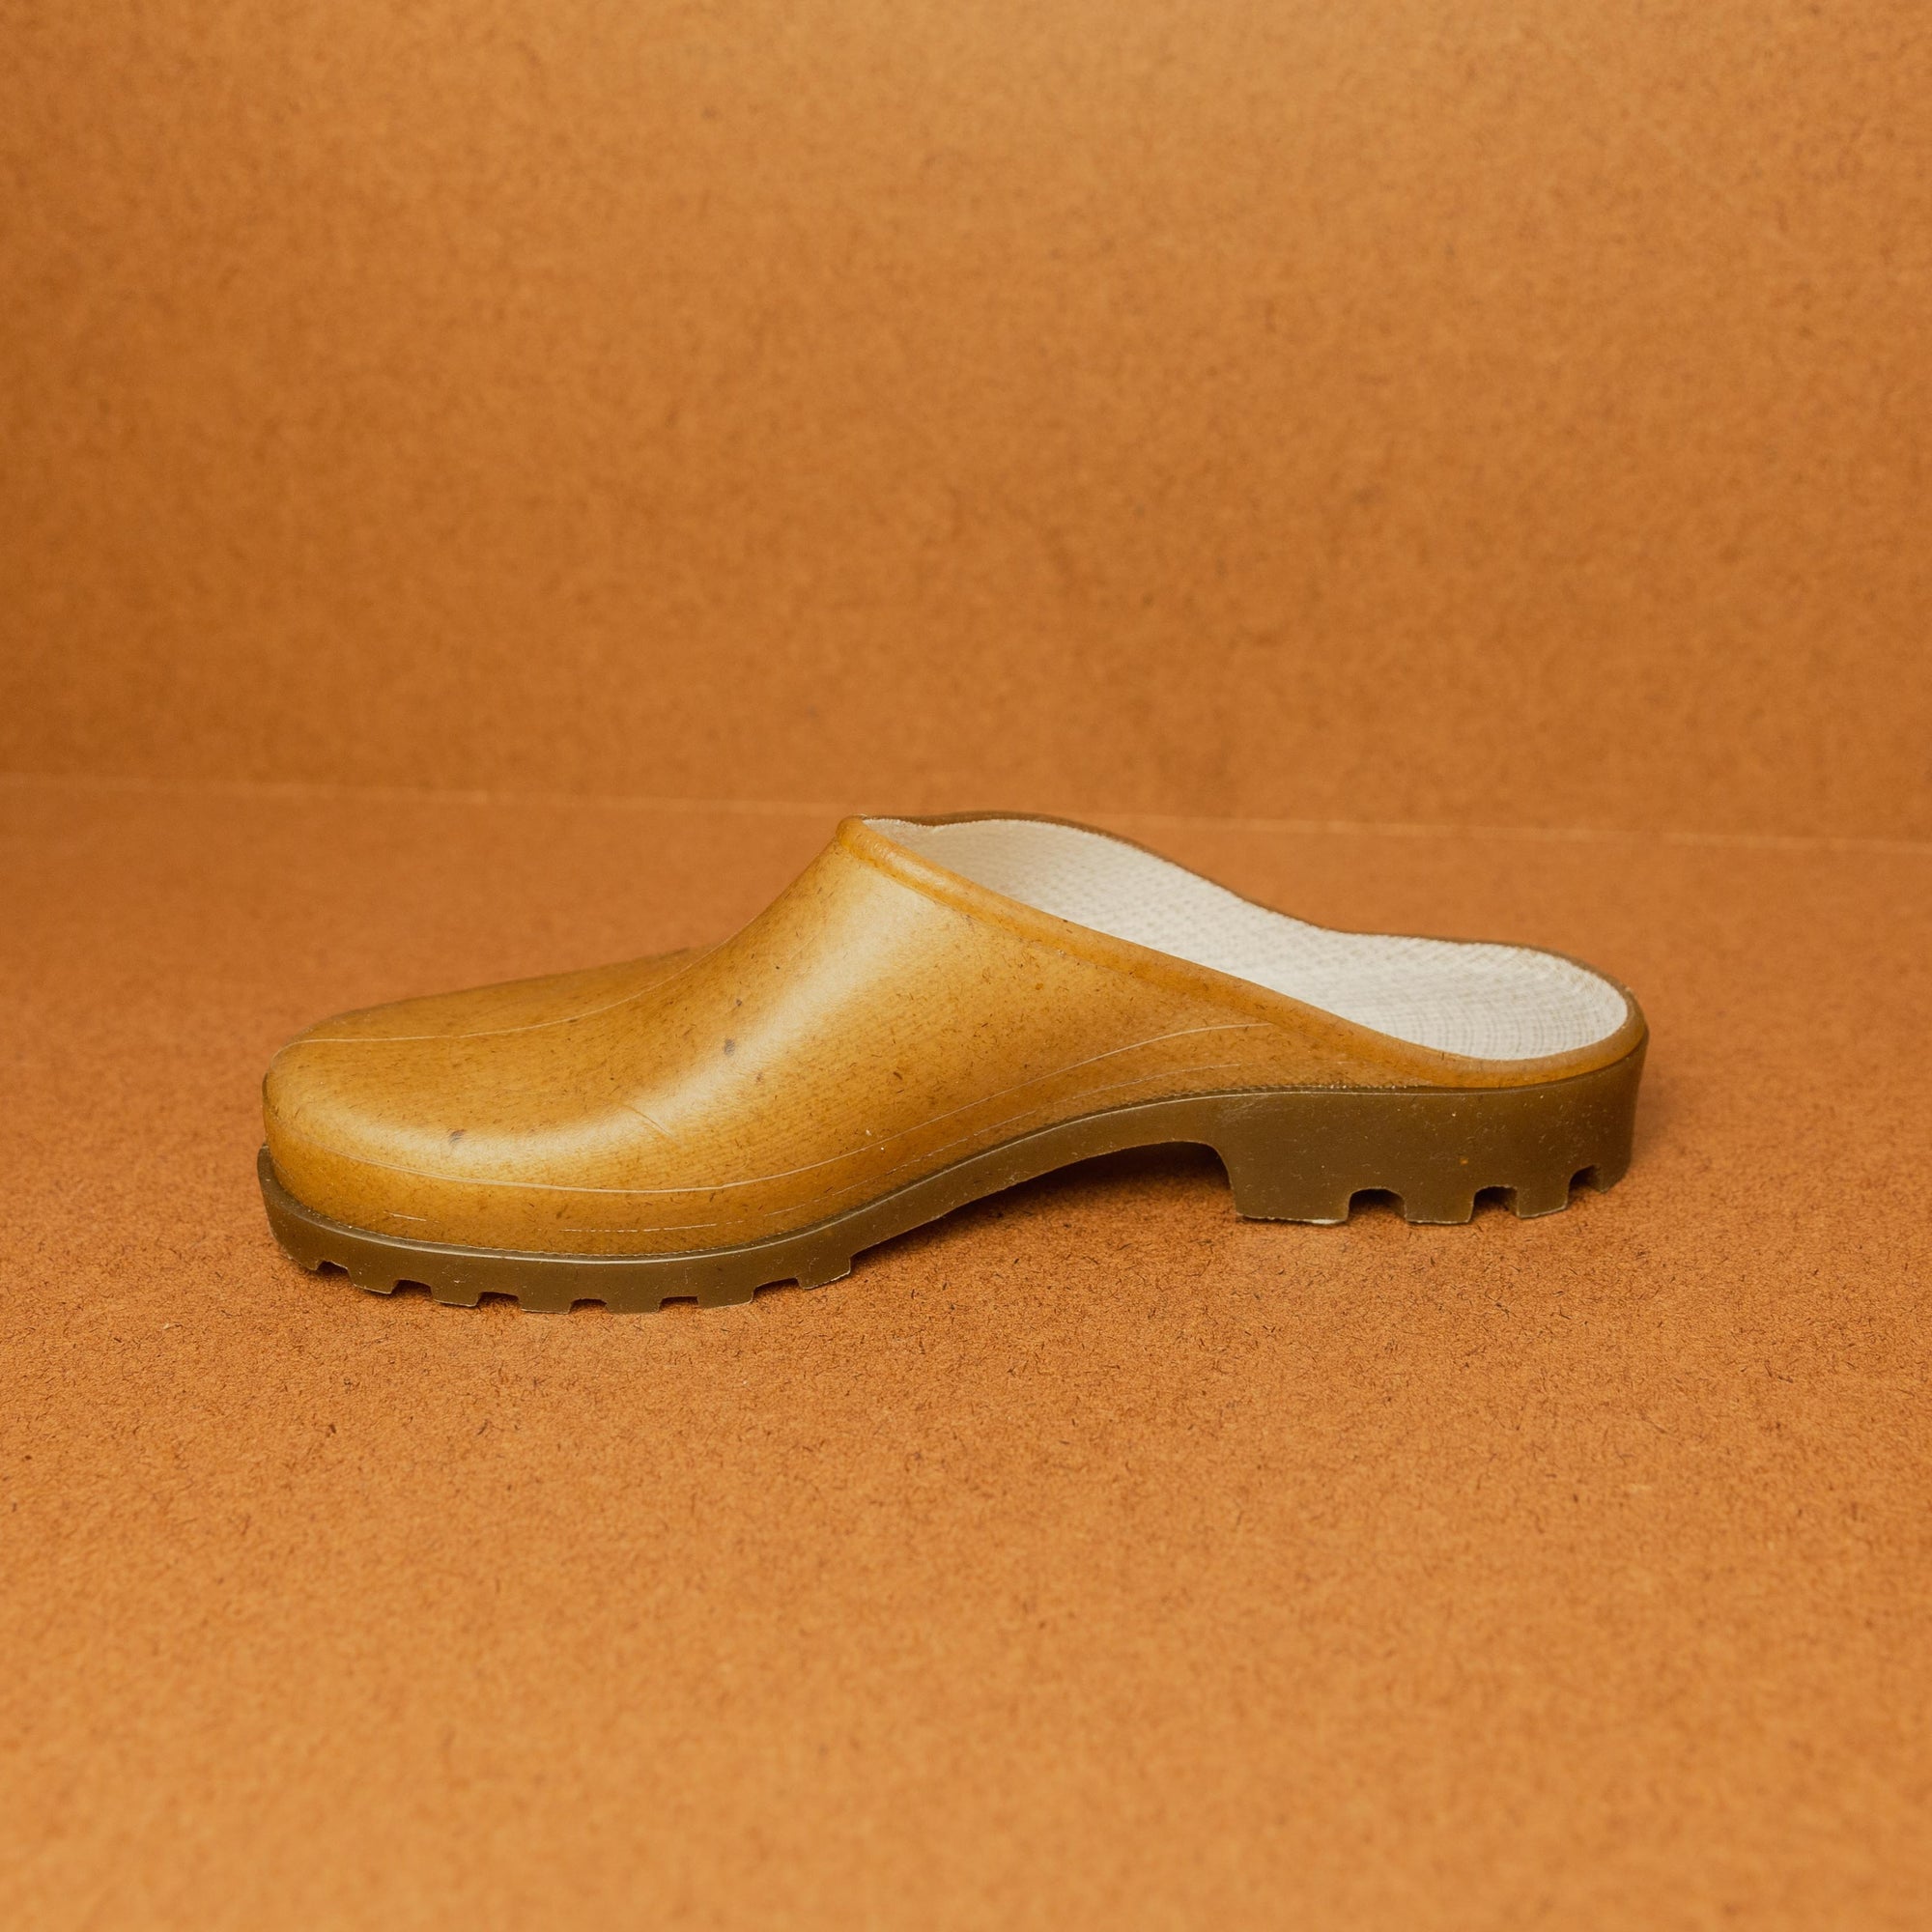 Plasticana Opana Mules right shoe